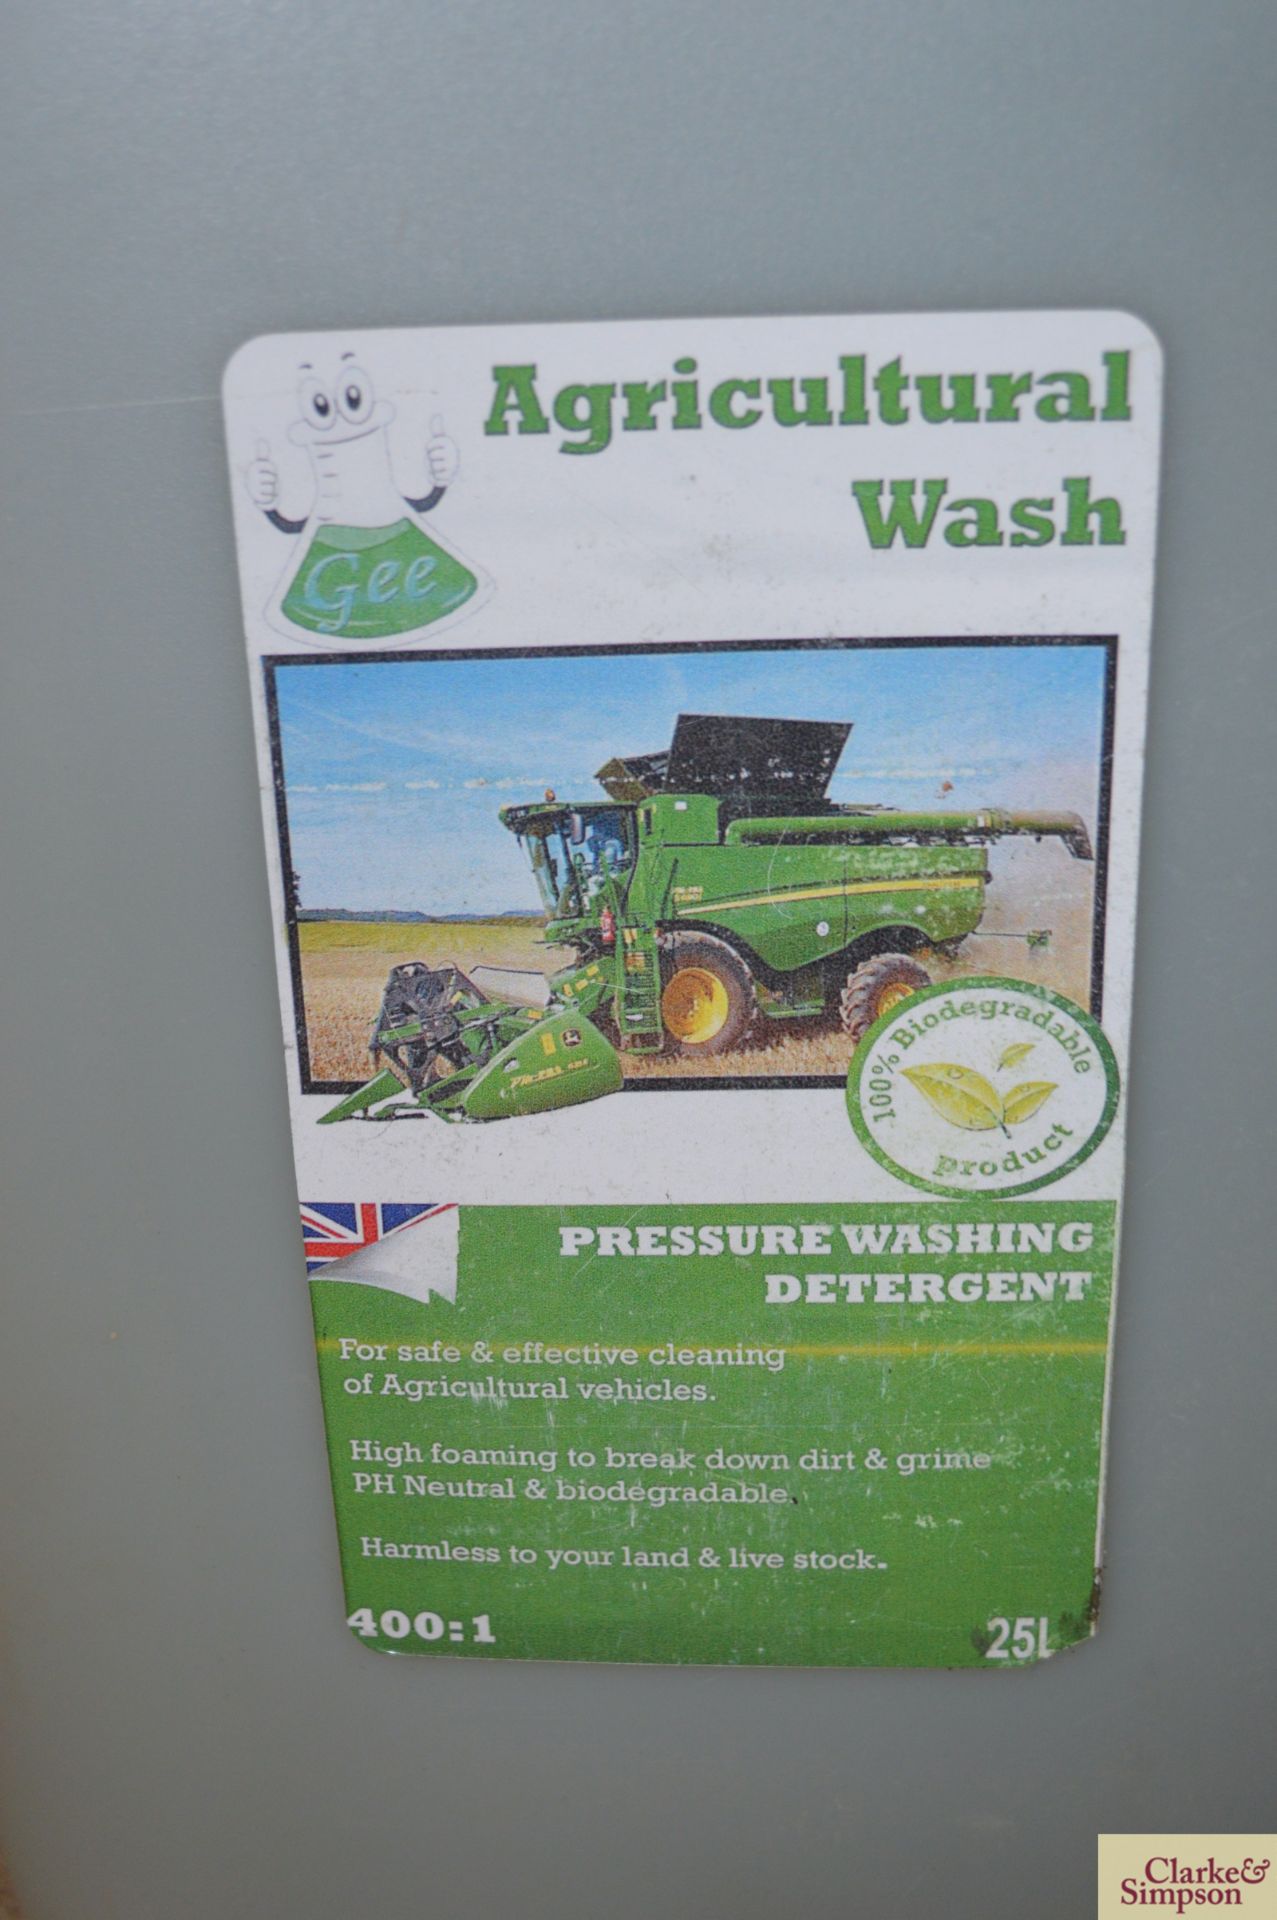 25L Agricultural Wash. - Image 2 of 2